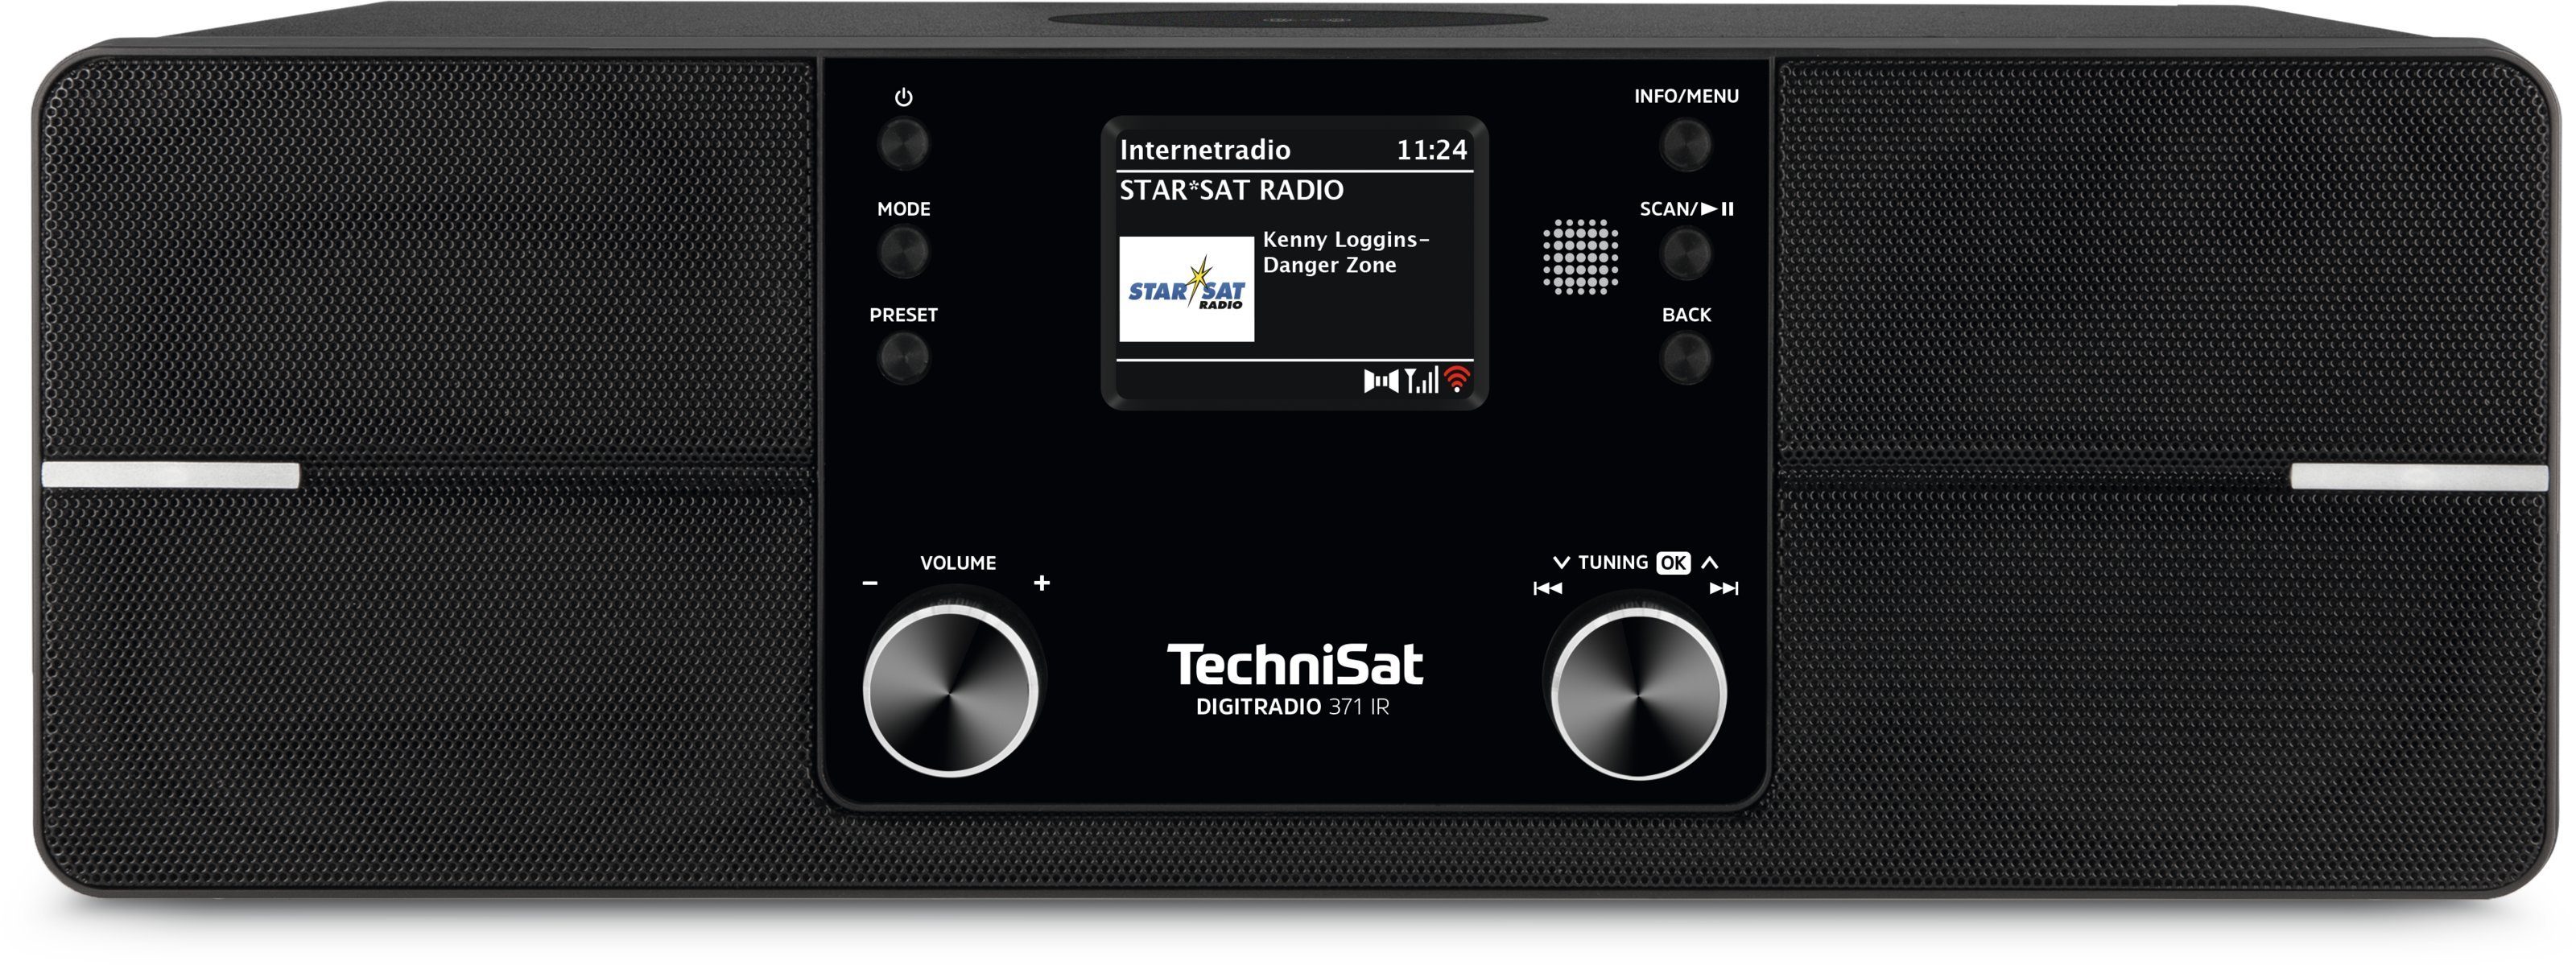 UKW DIGITRADIO Internet-Radio mit Fernbedienung) TechniSat 371 IR (Internetradio, RDS, W, Bluetooth-Audiostreaming, (DAB), 10,00 mit Digitalradio